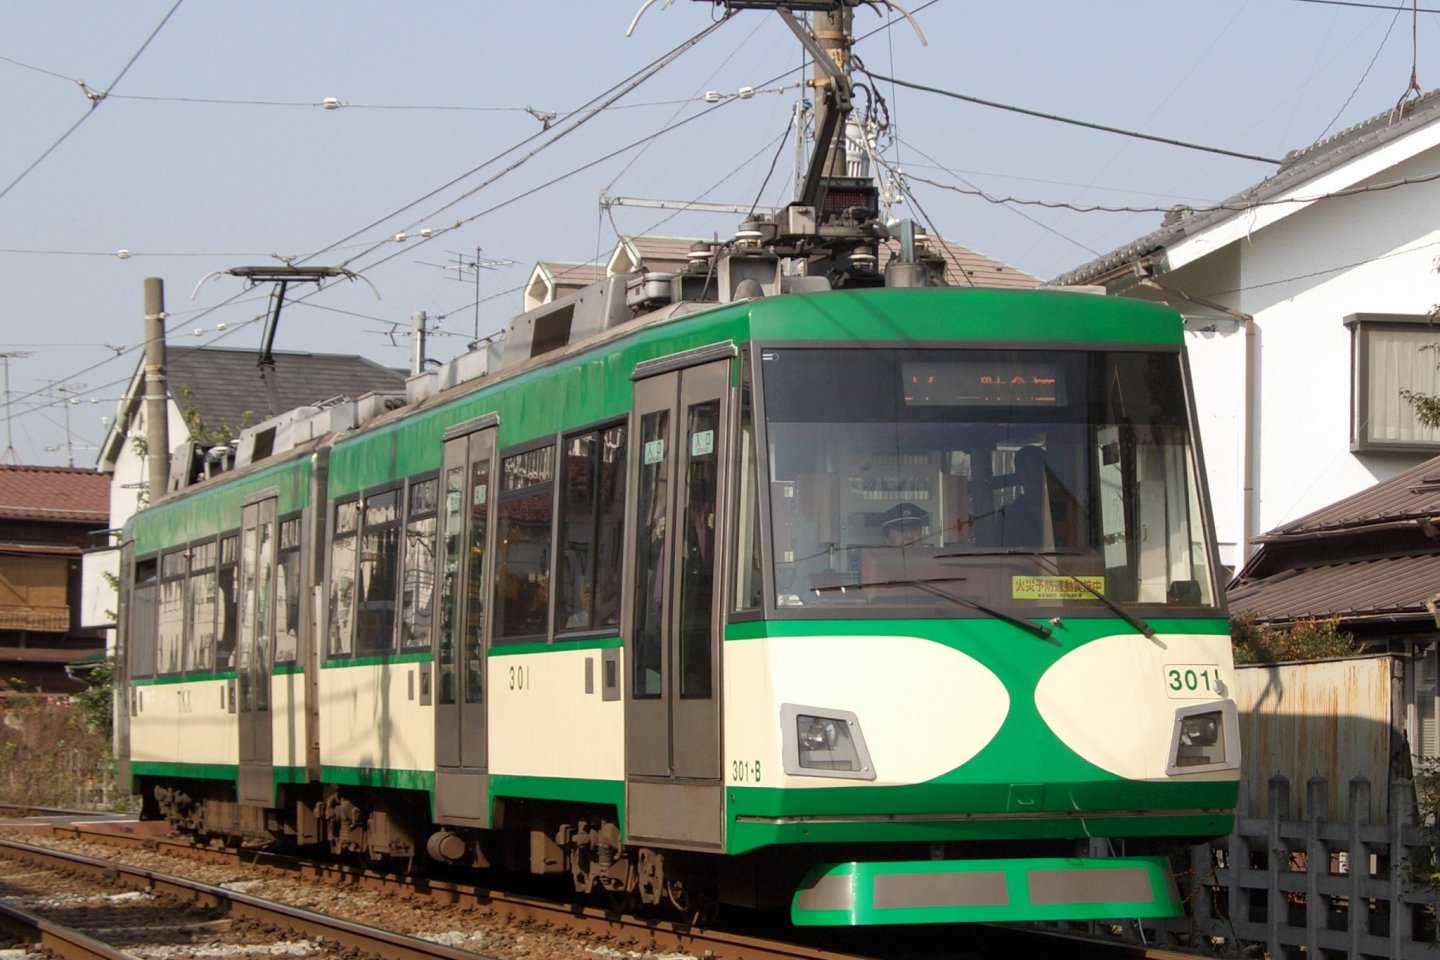 Tokyu Setagaya Line tram in action